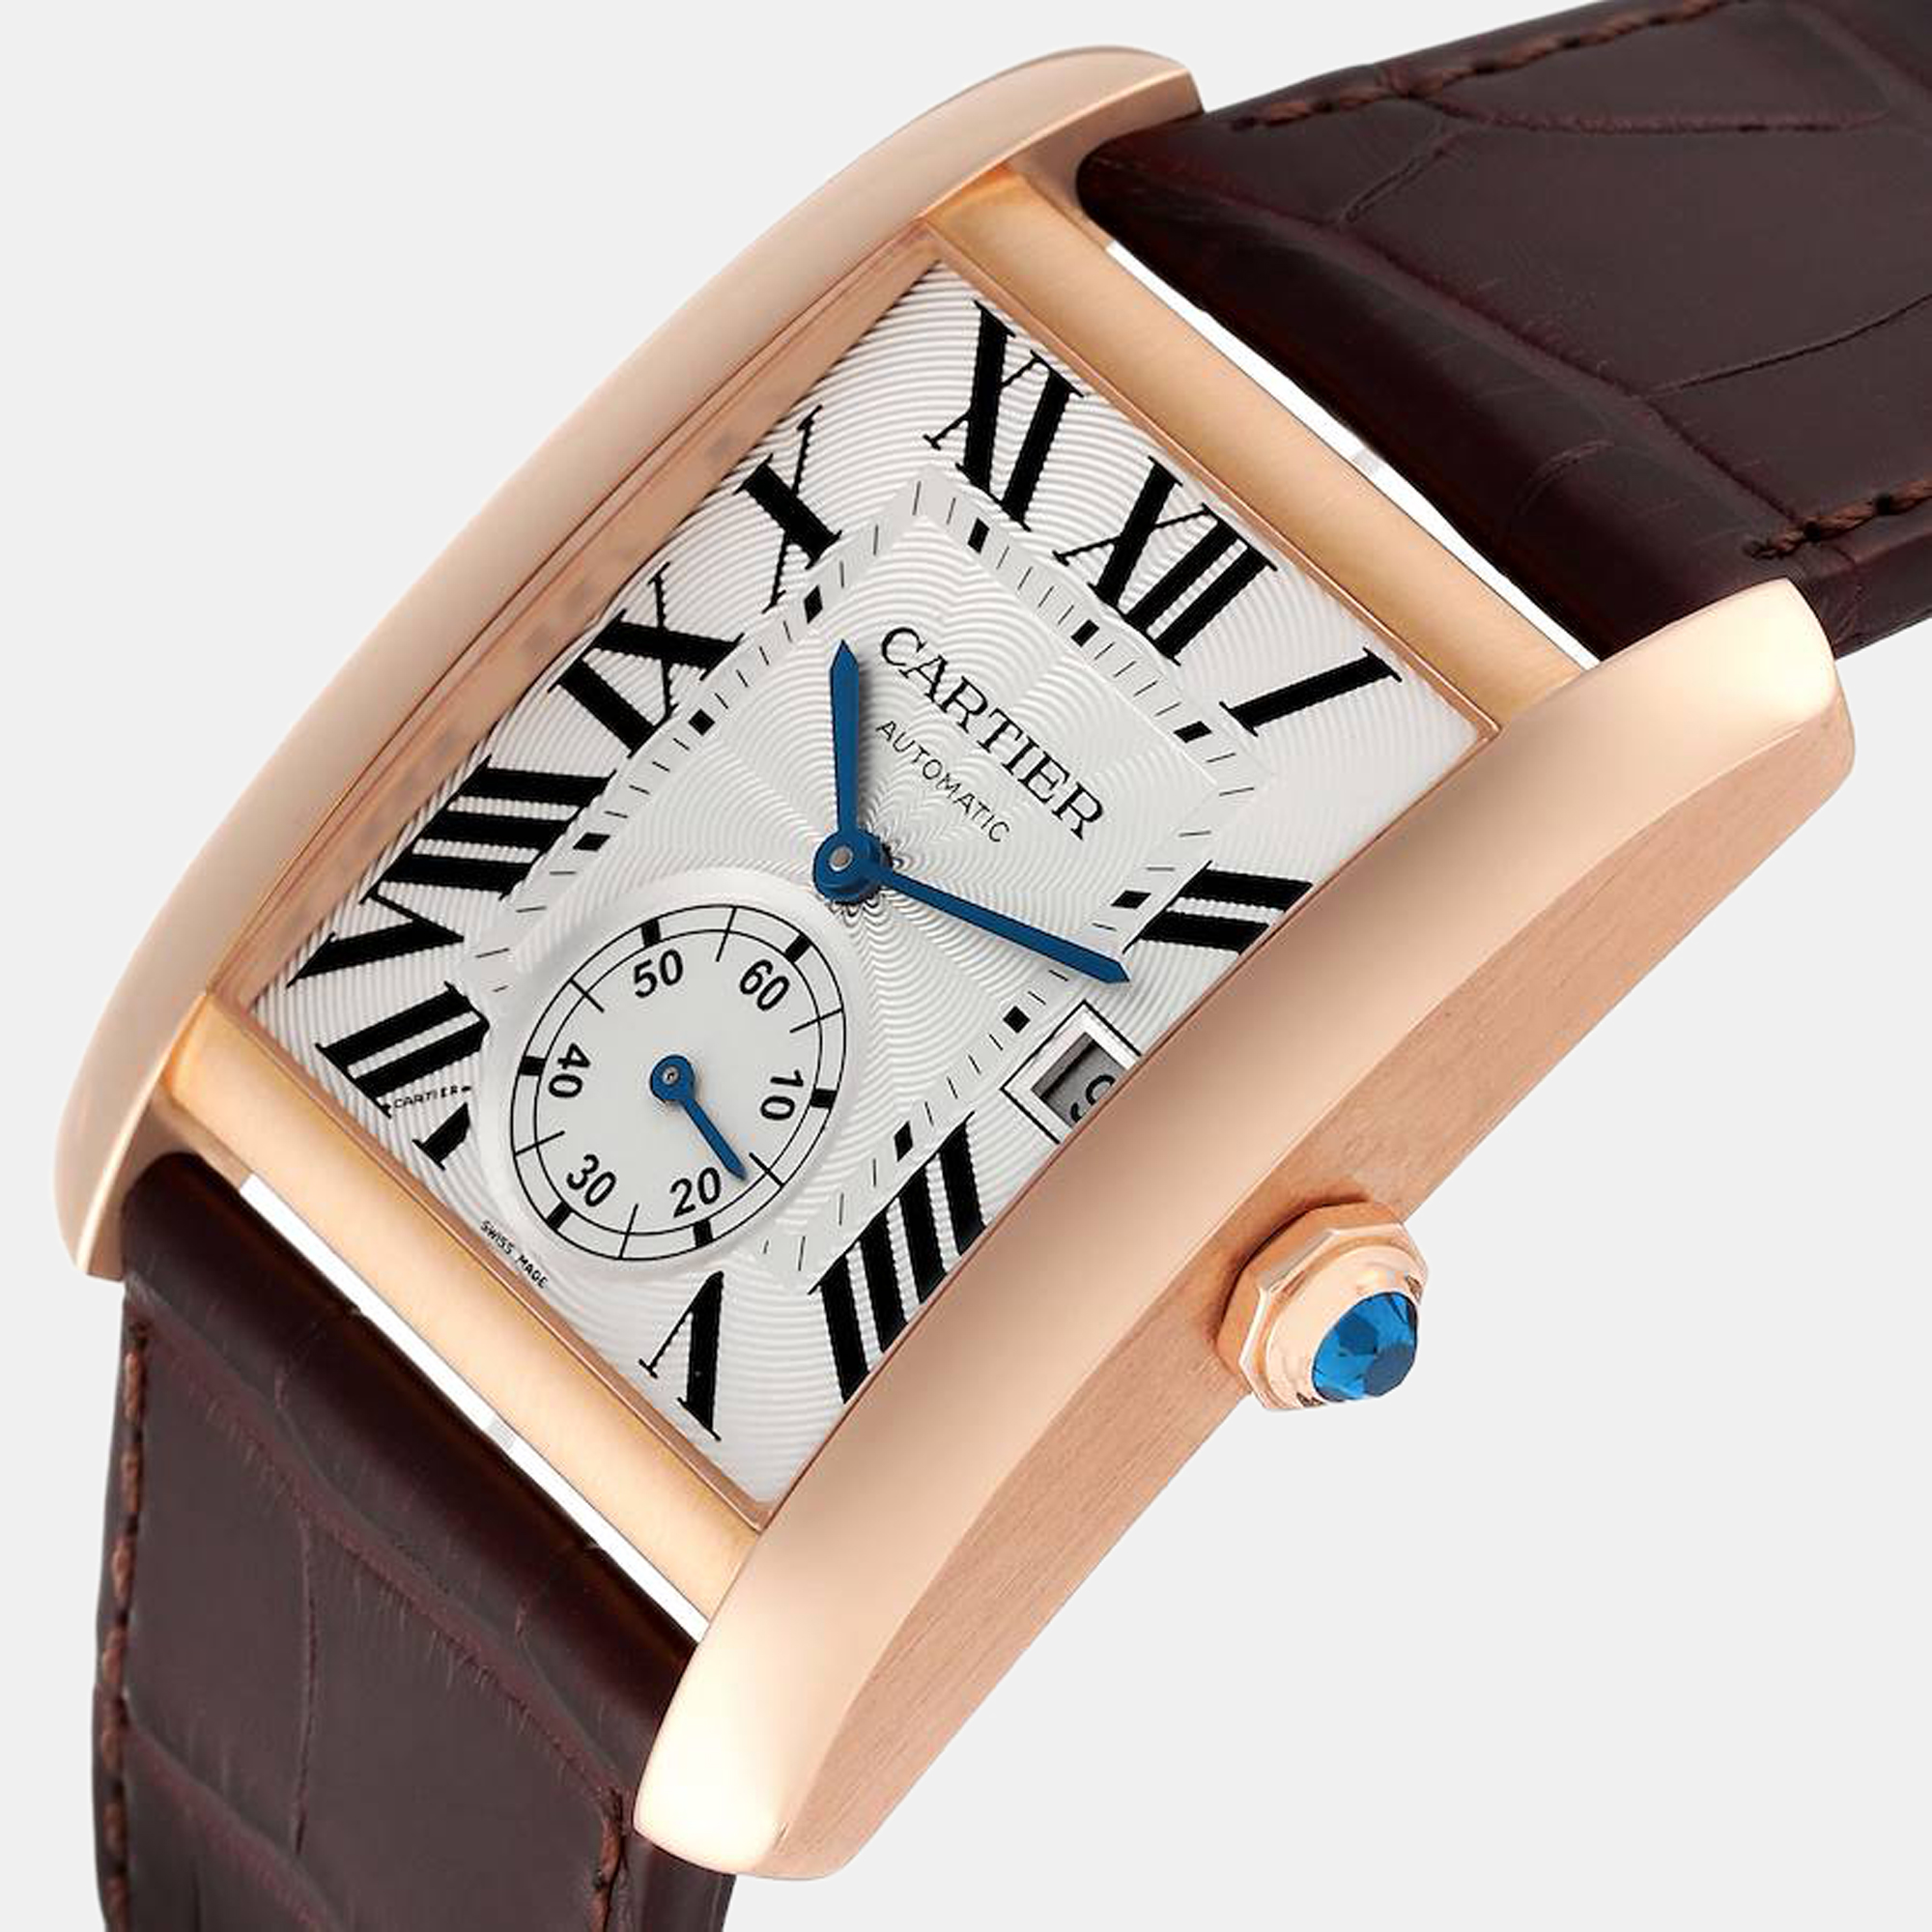 

Cartier Silver 18k Rose Gold Tank MC W5330001 Automatic Men's Wristwatch 34 mm